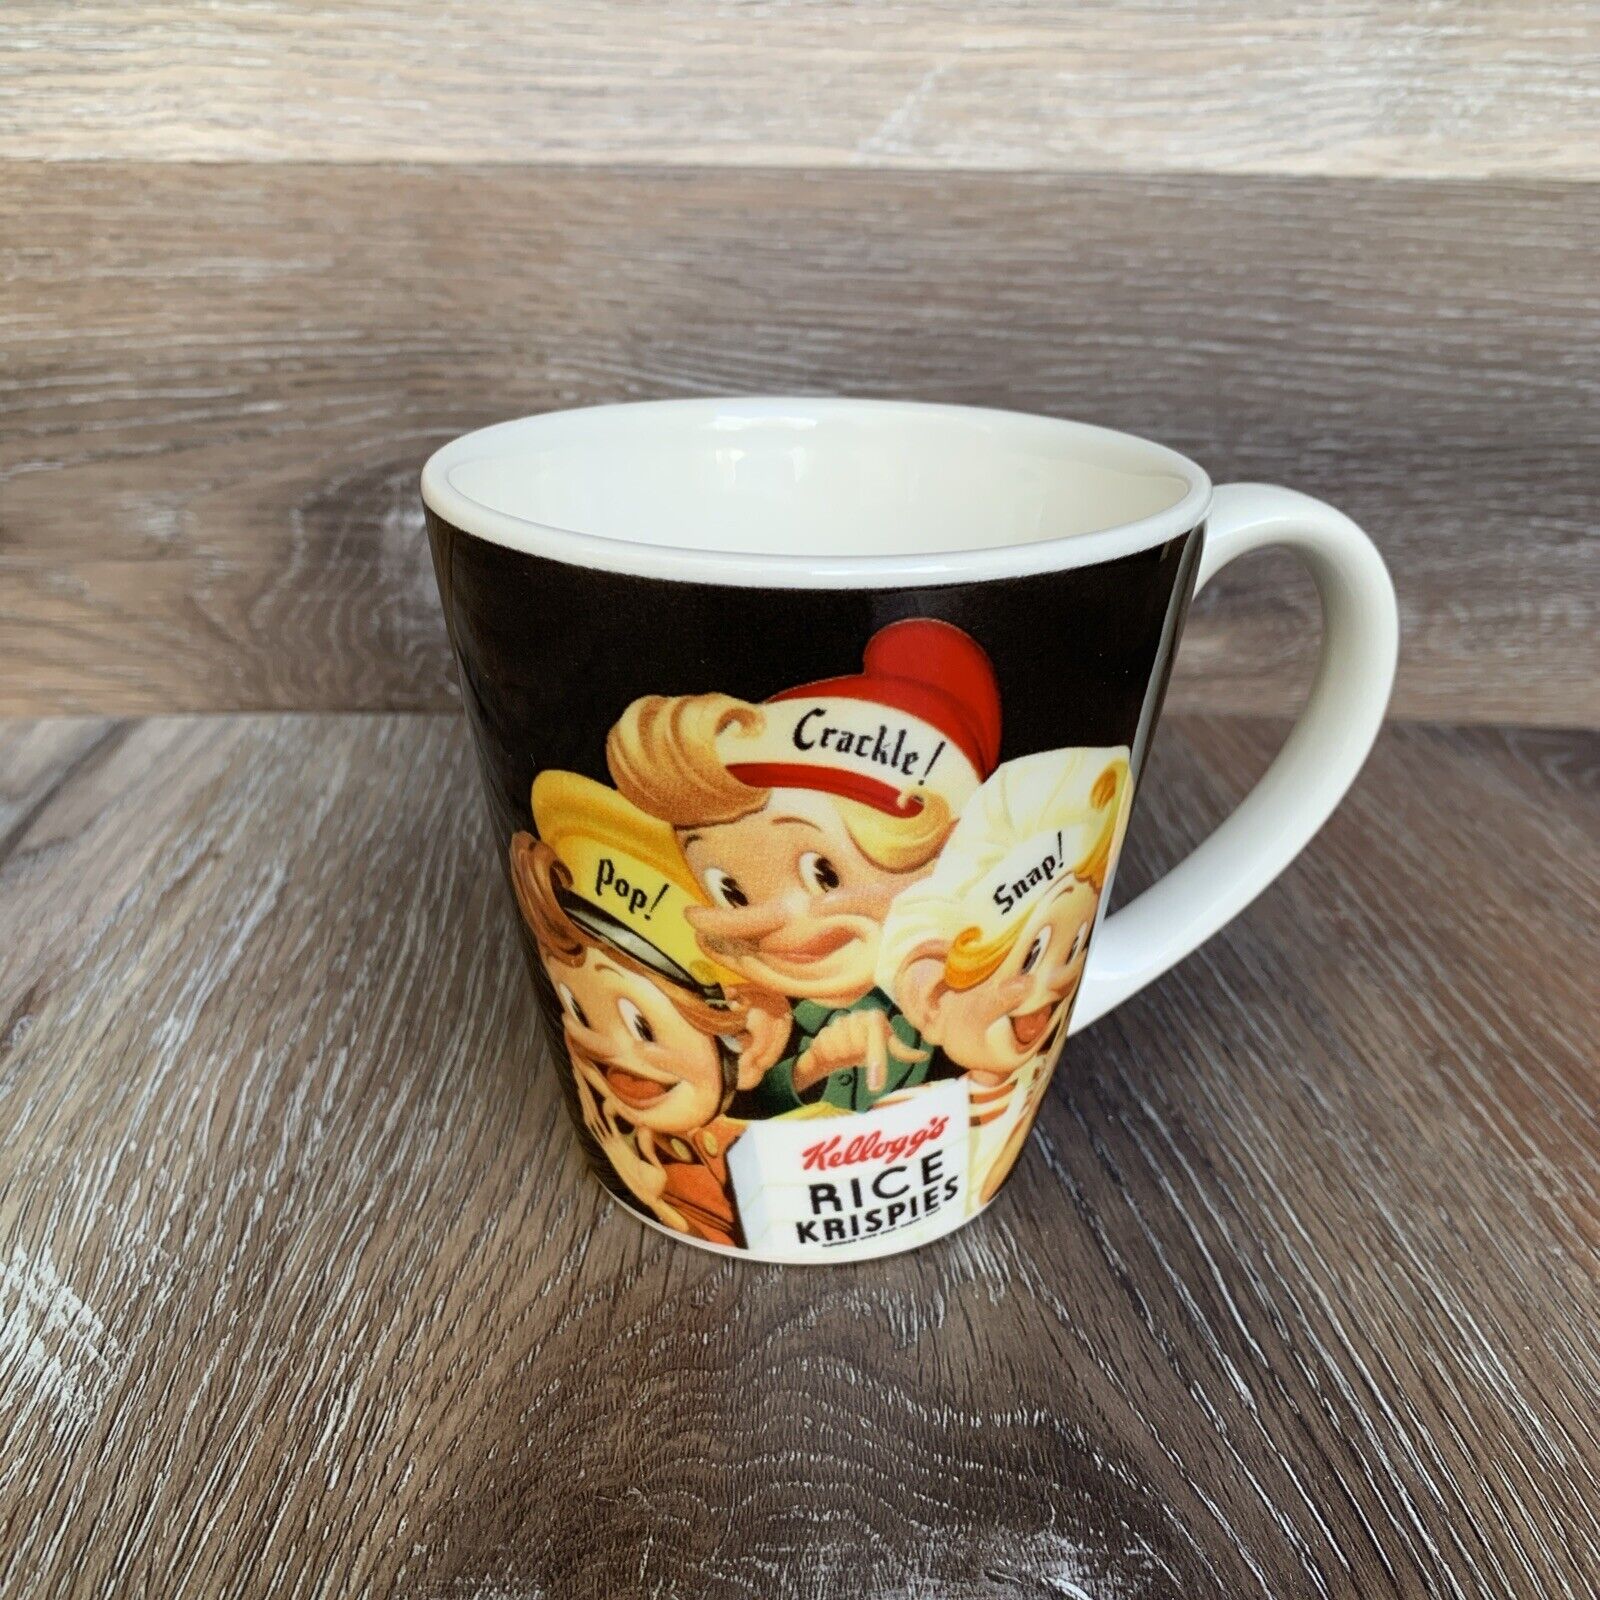 2006 Vintage Kellogg’s Rice Crispy Coffee Mug With Snap, Crackle, and Pop On It